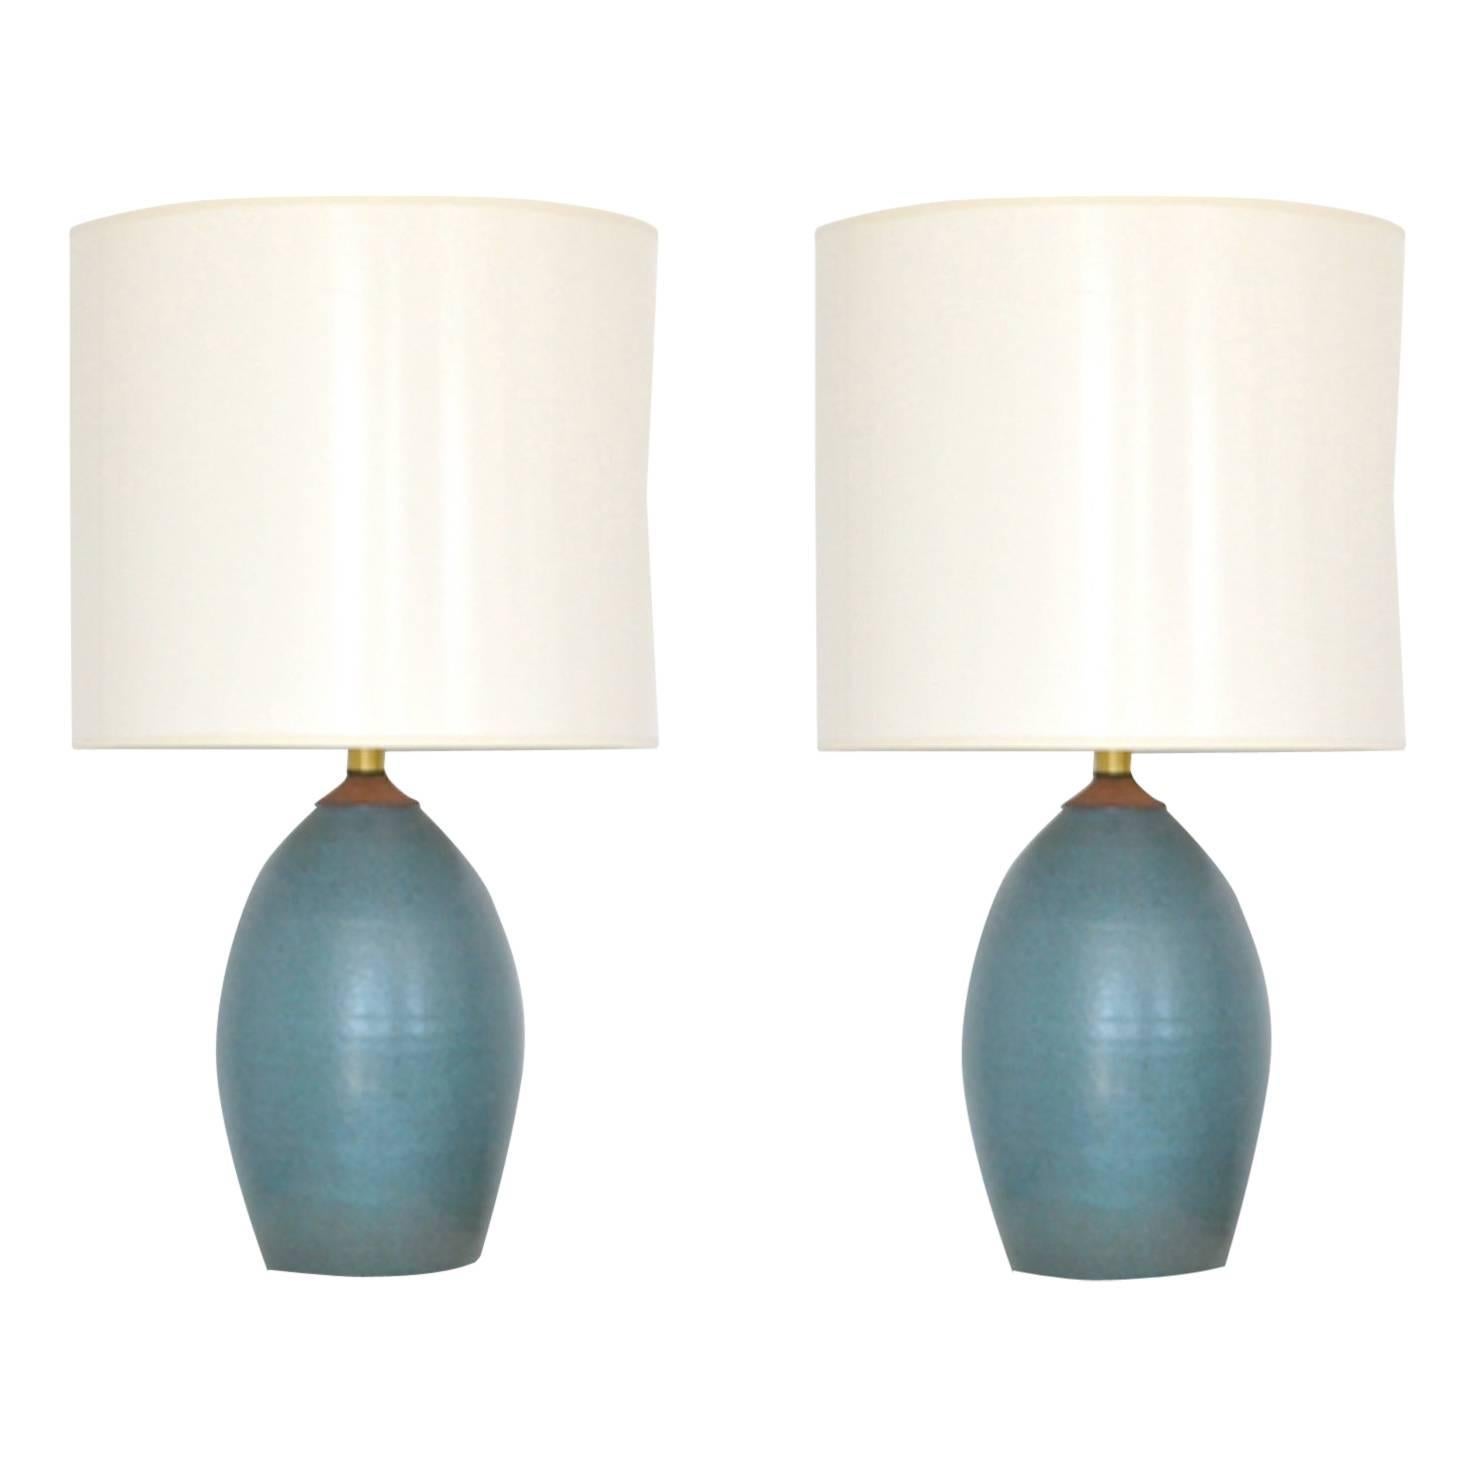 Pair of Mid-Century Matte Blue Glazed Ceramic Organic Form Table Lamps